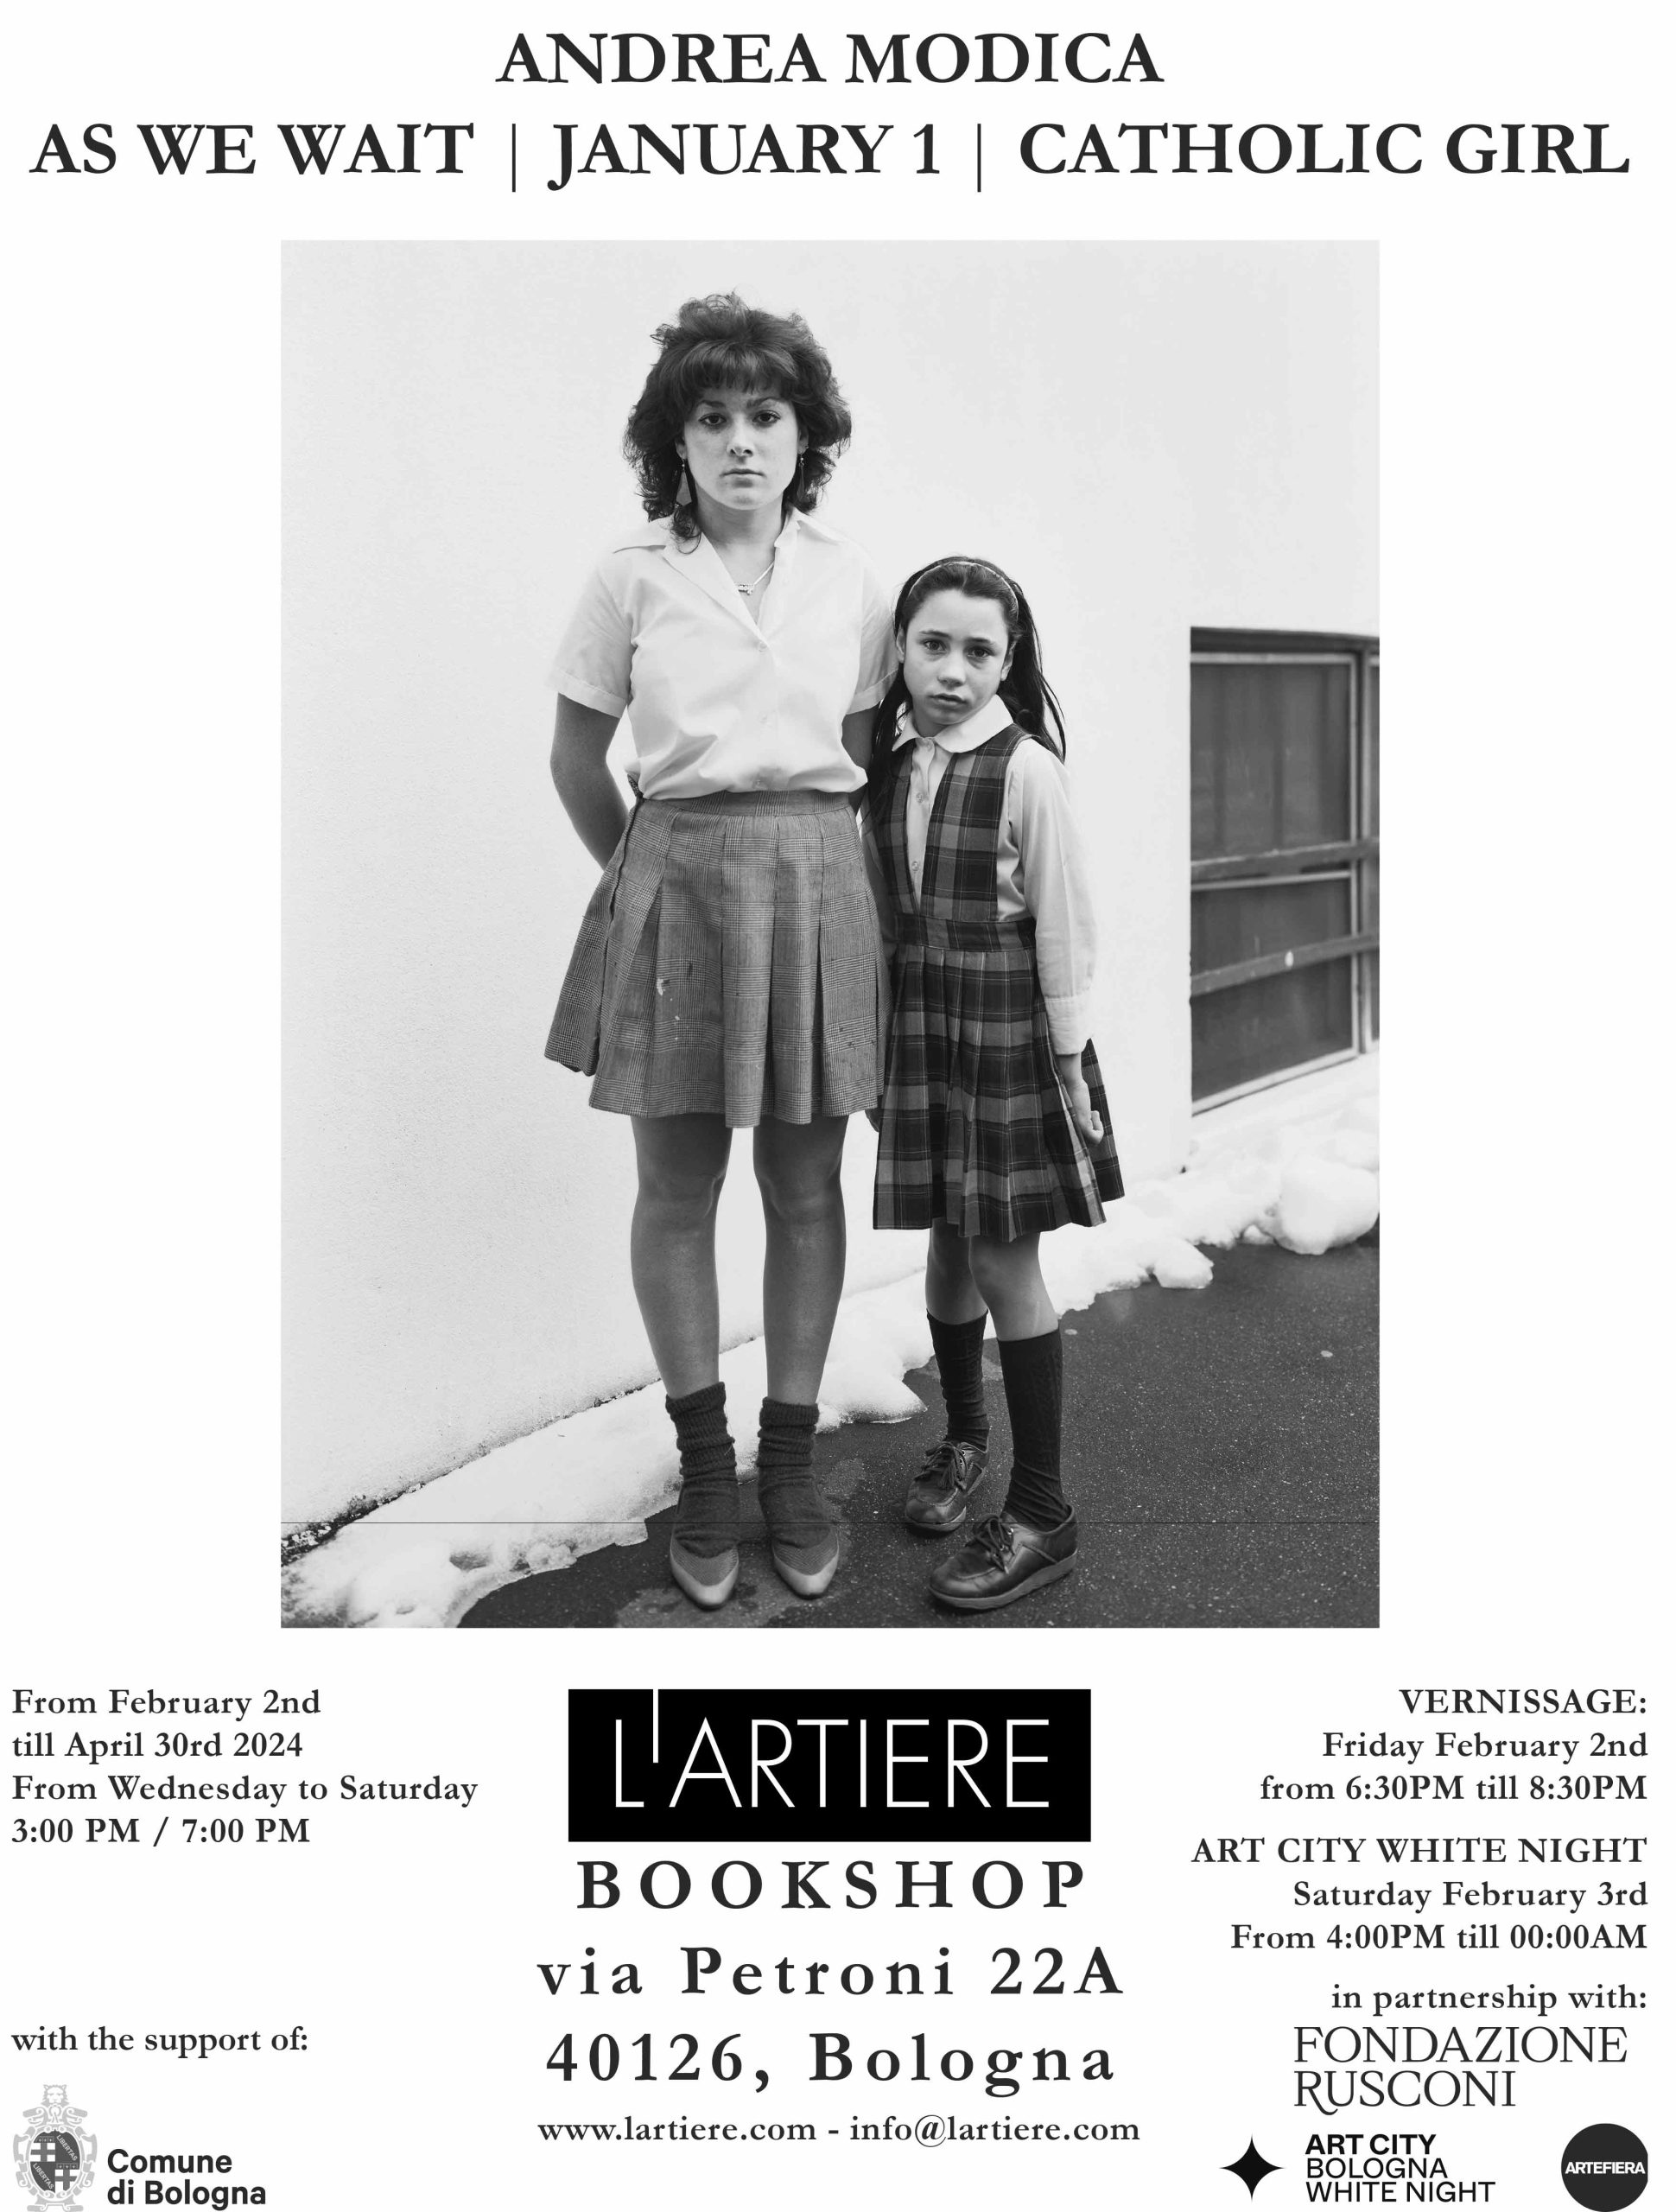 NEW EXHIBITION @L’Artiere Bookshop: ANDREA MODICA “AS WE WAIT | JANUARY 1 | CATHOLIC GIRL”